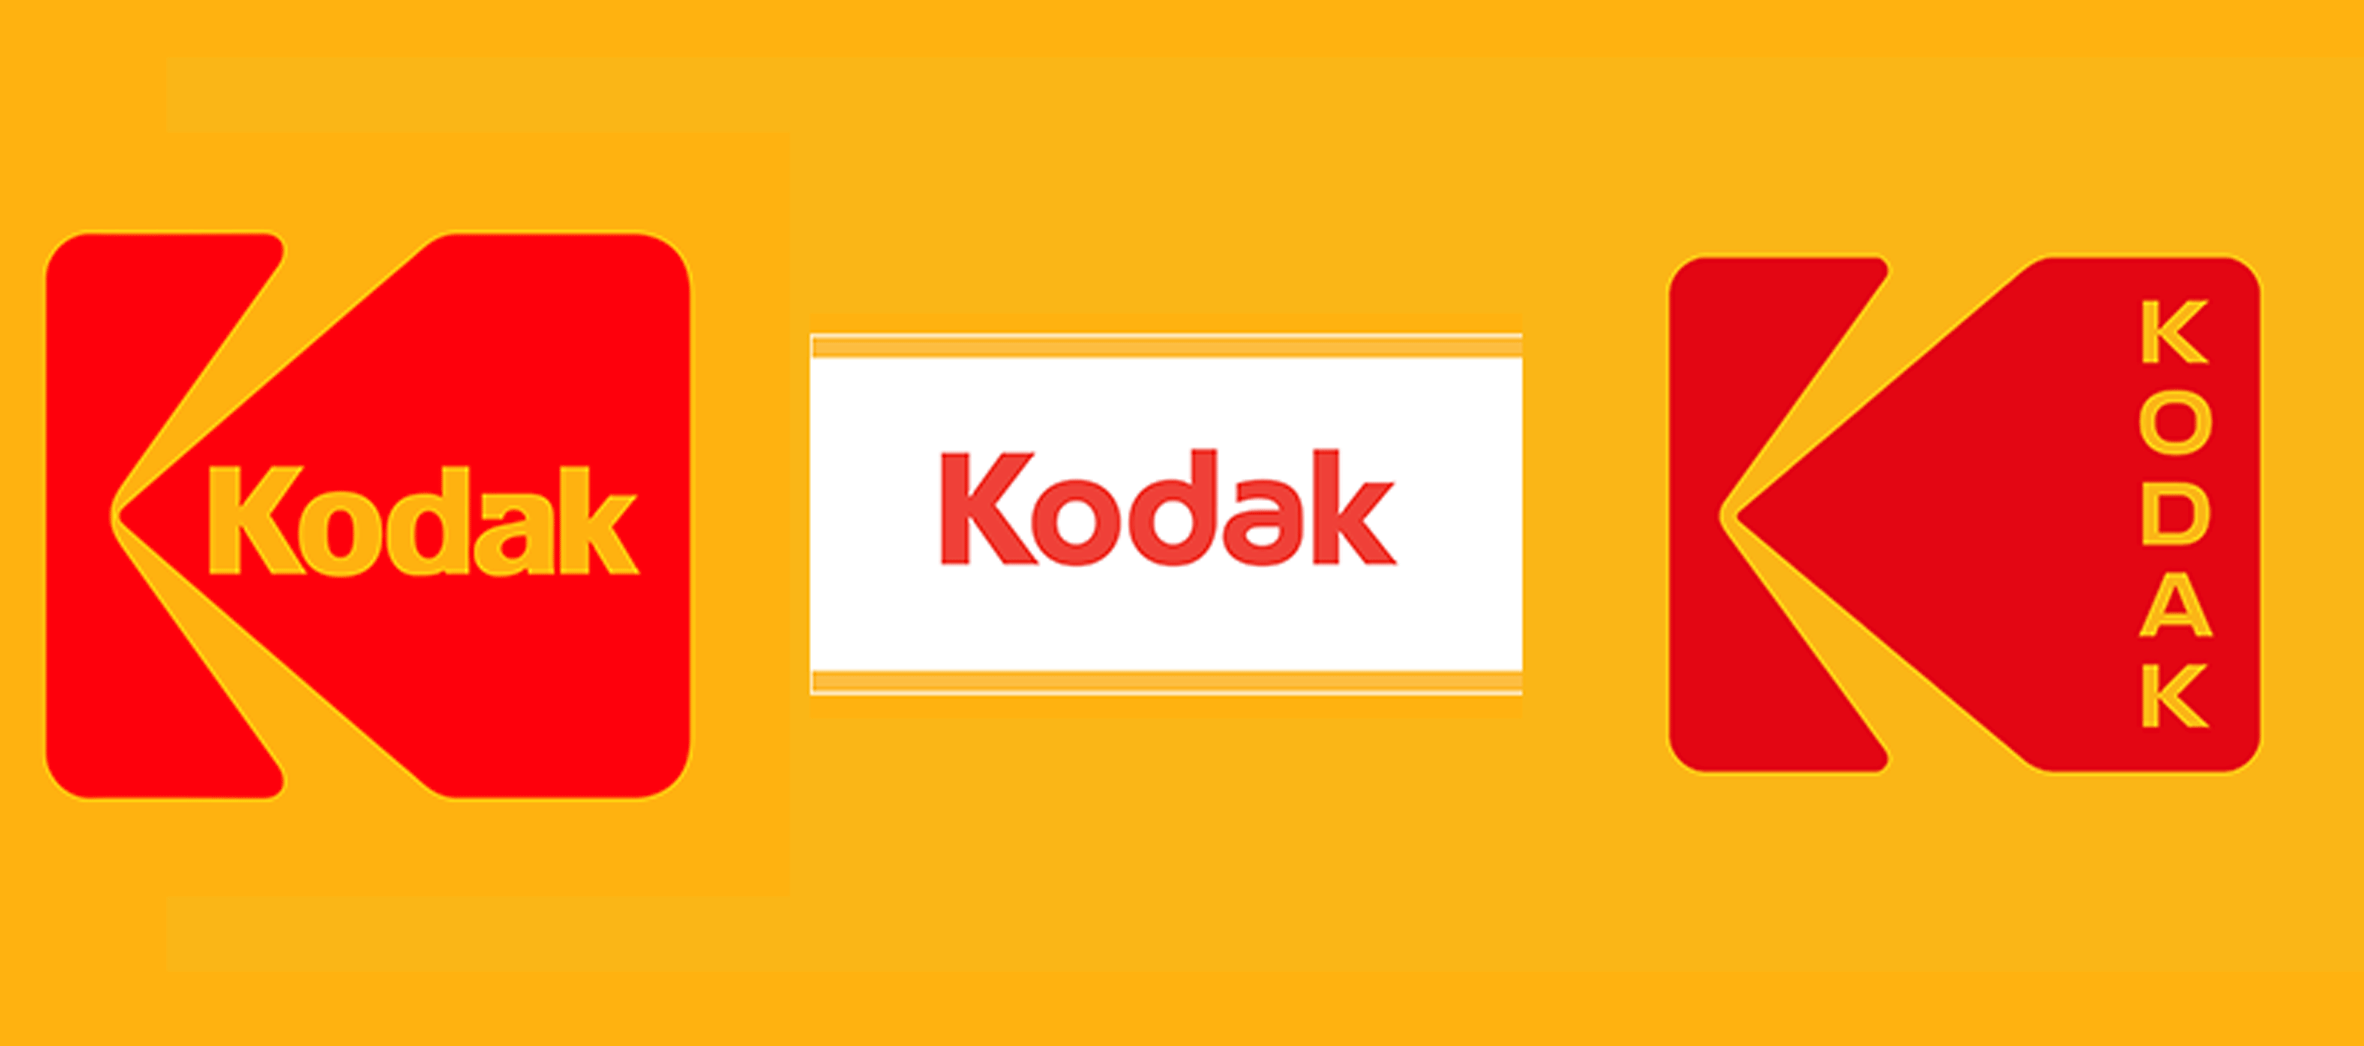 News: Kodak rebrand